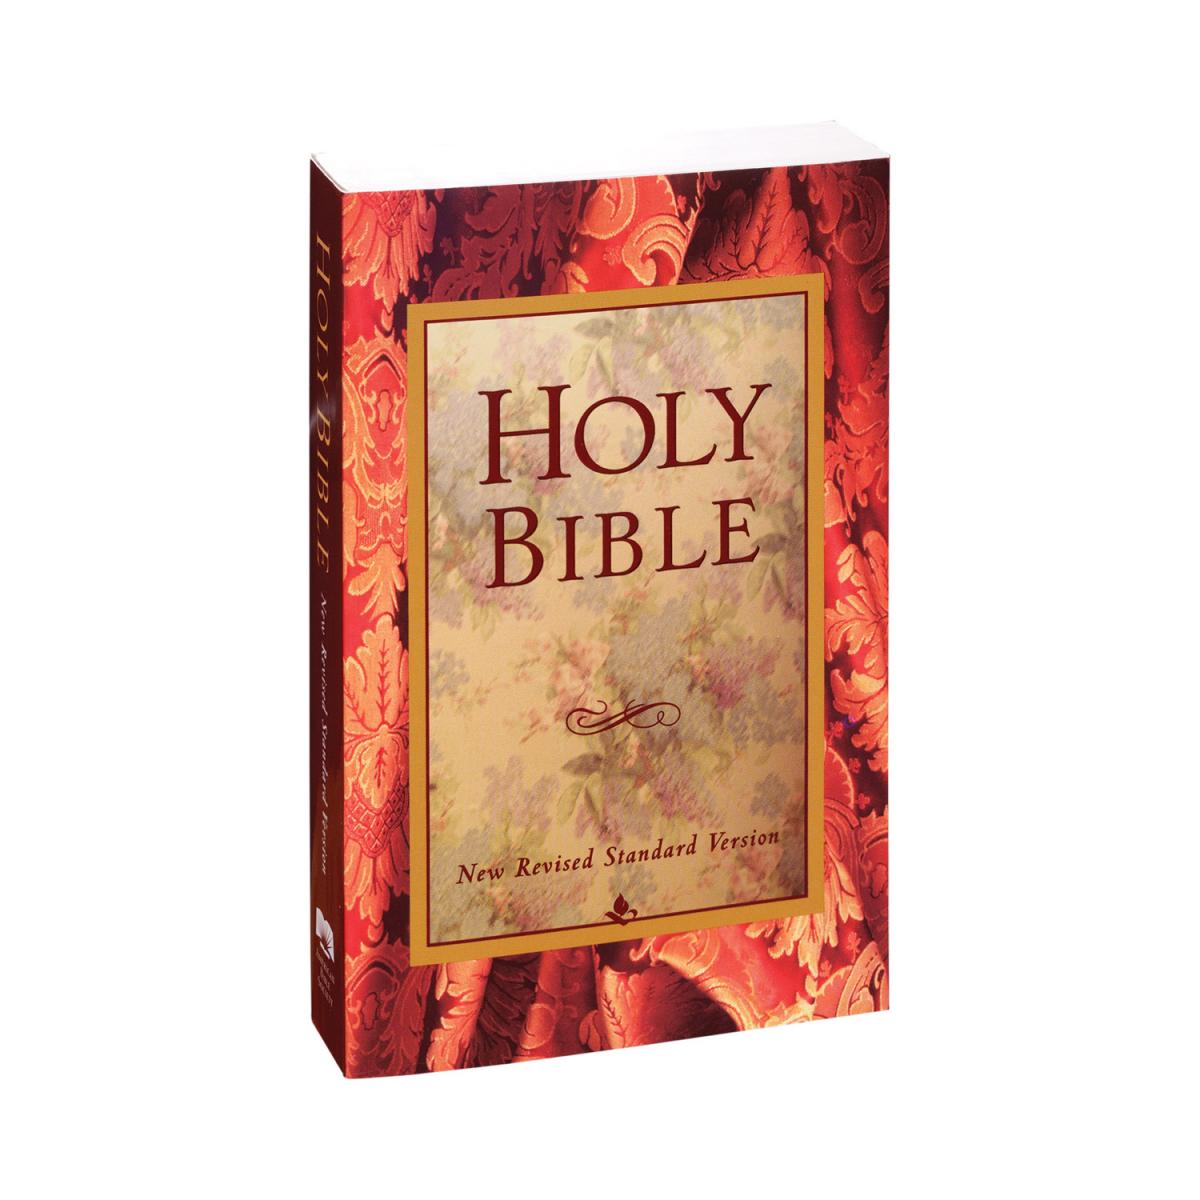 NRSV New Revised Standard Version Bible